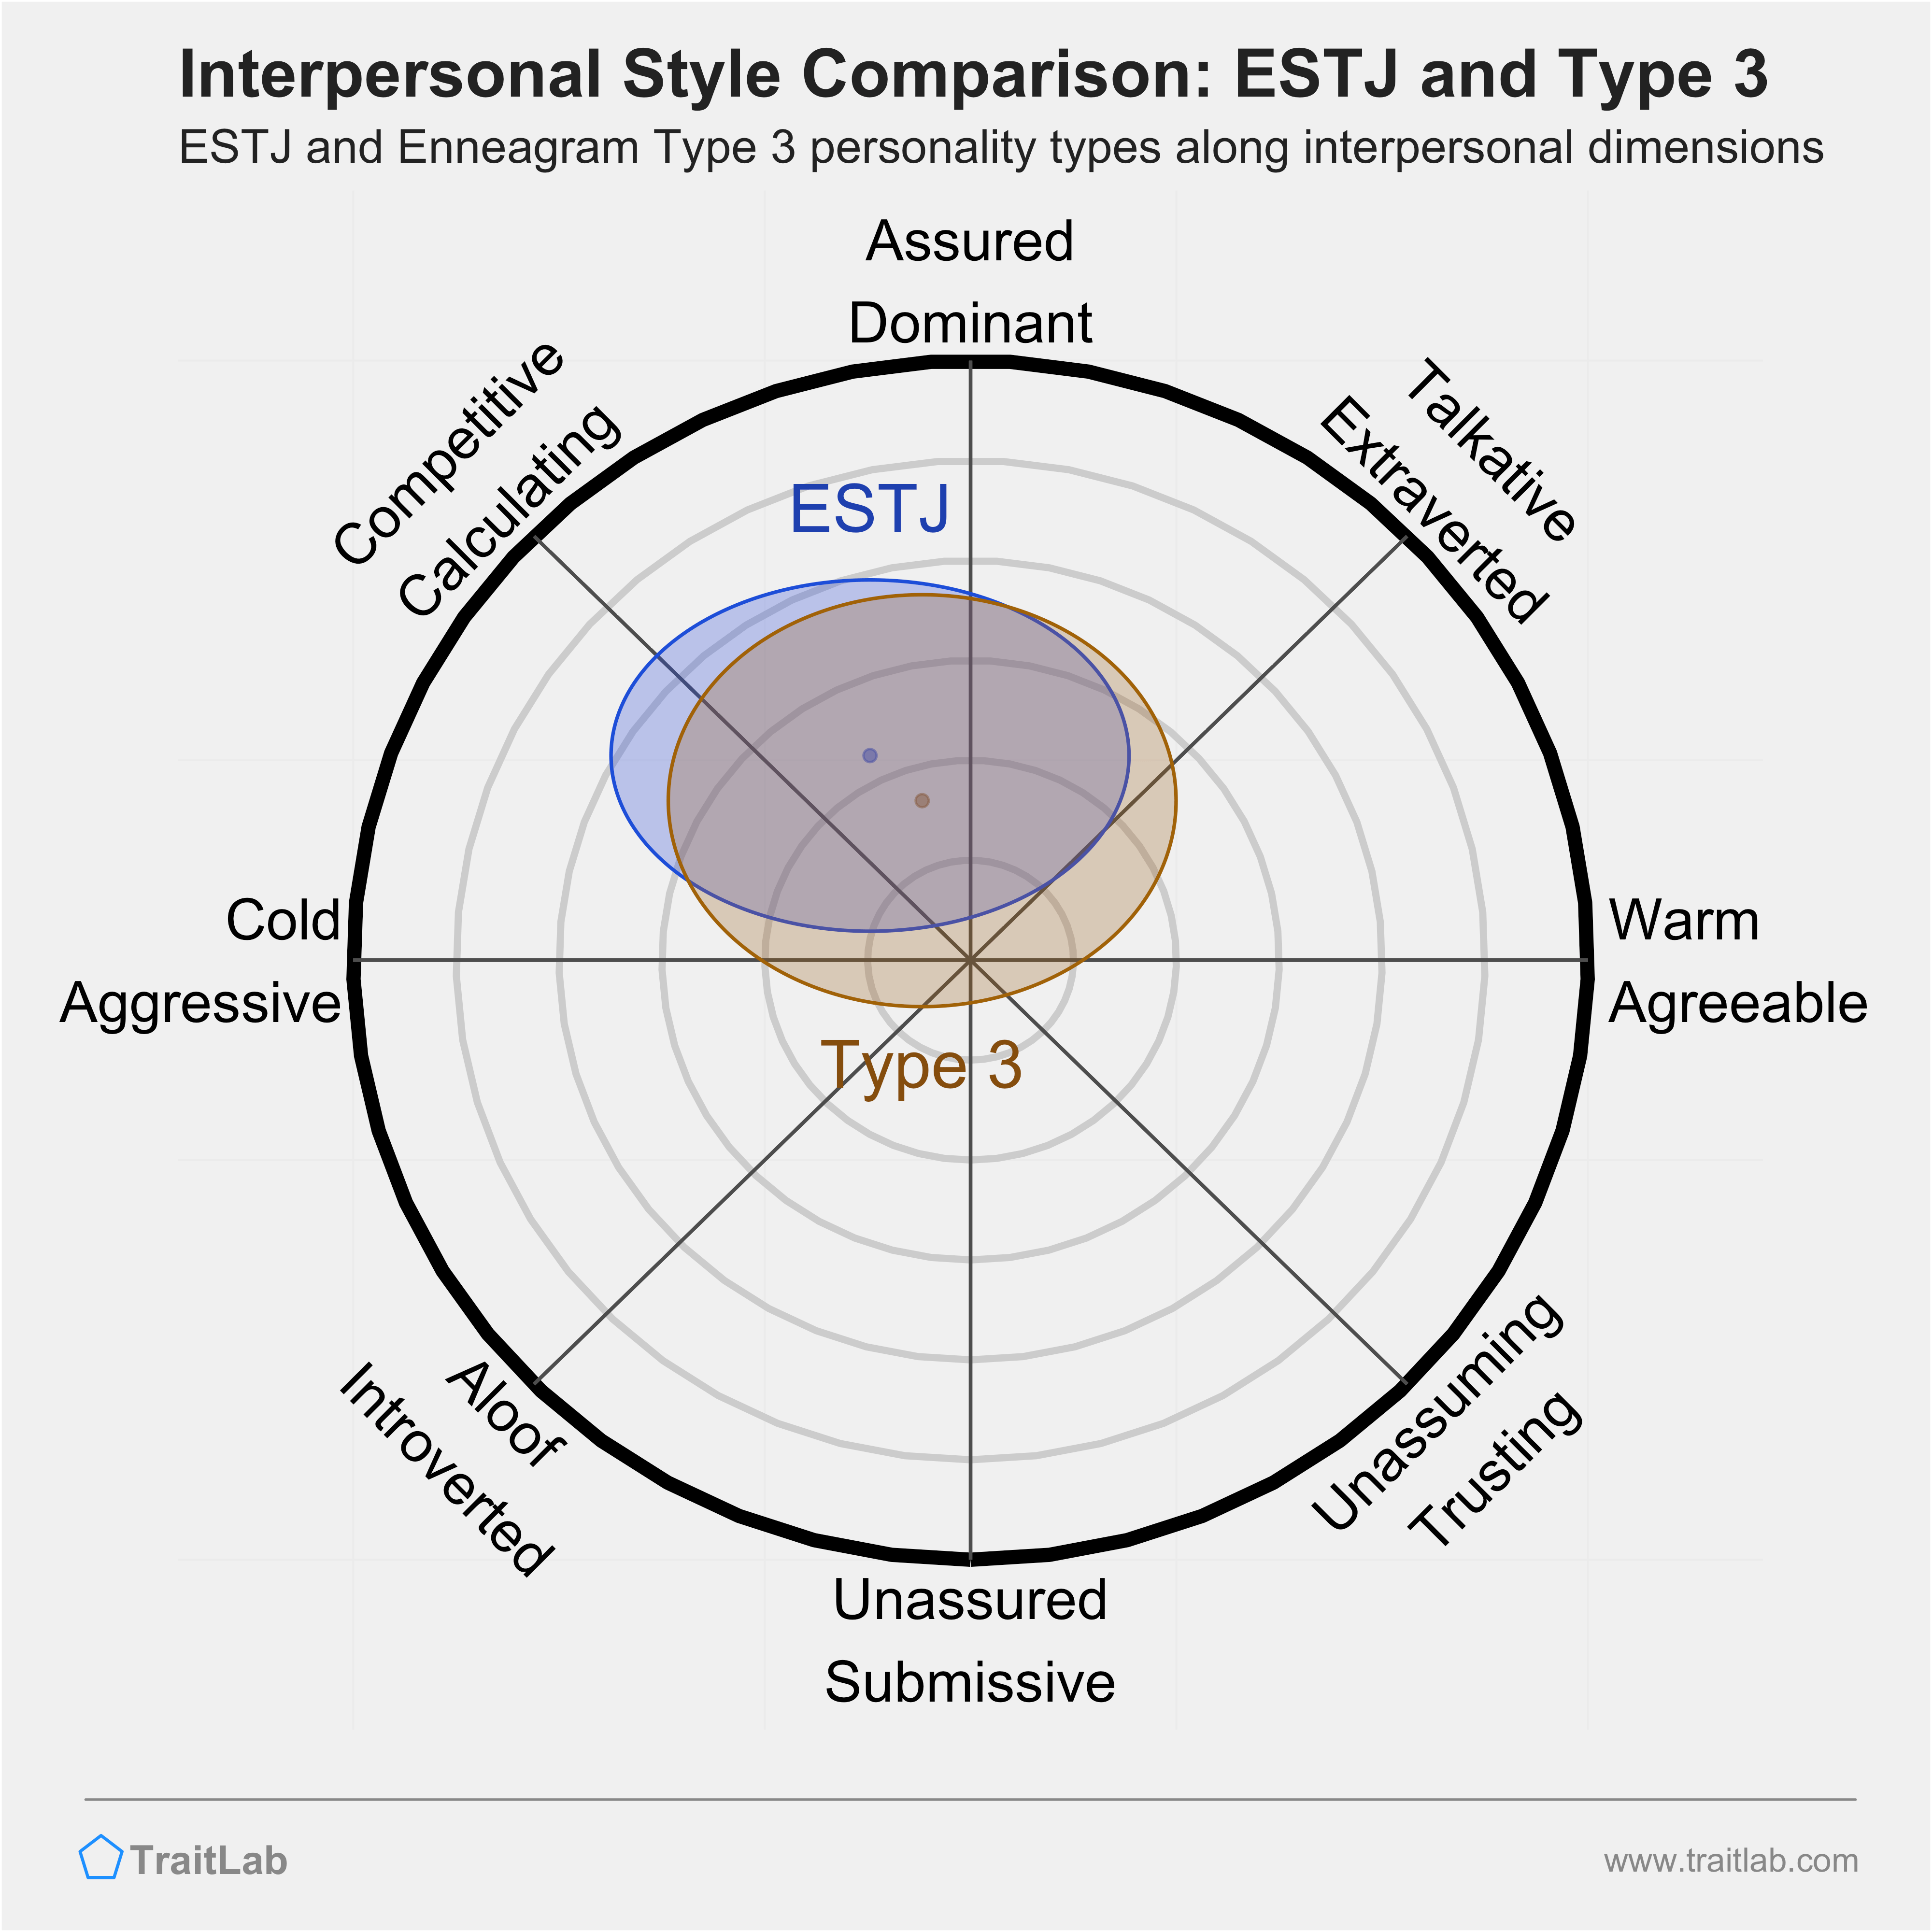 Enneagram ESTJ and Type 3 comparison across interpersonal dimensions